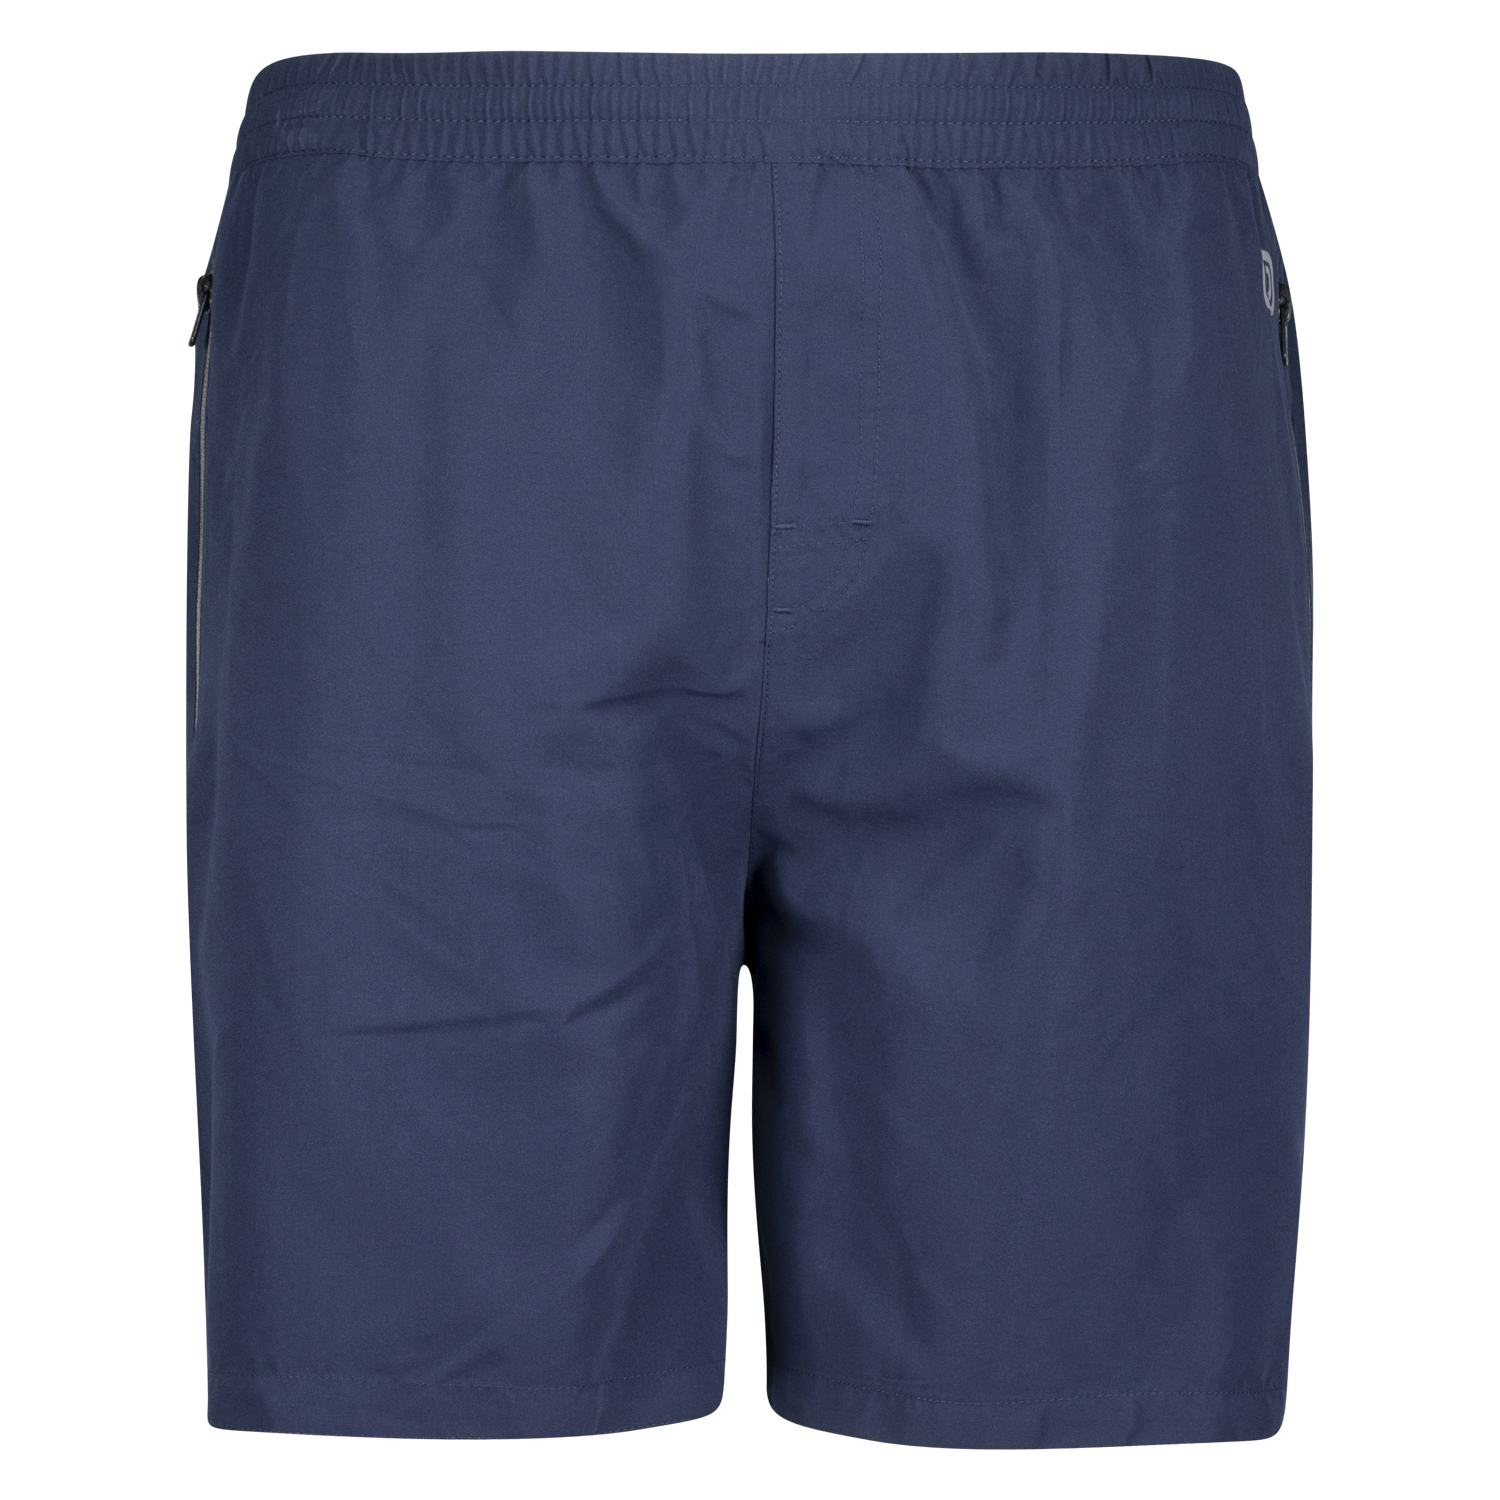 Bermuda shorts / swim bermudas in navy for men by Adamo series Otto in oversizes up to 14XL